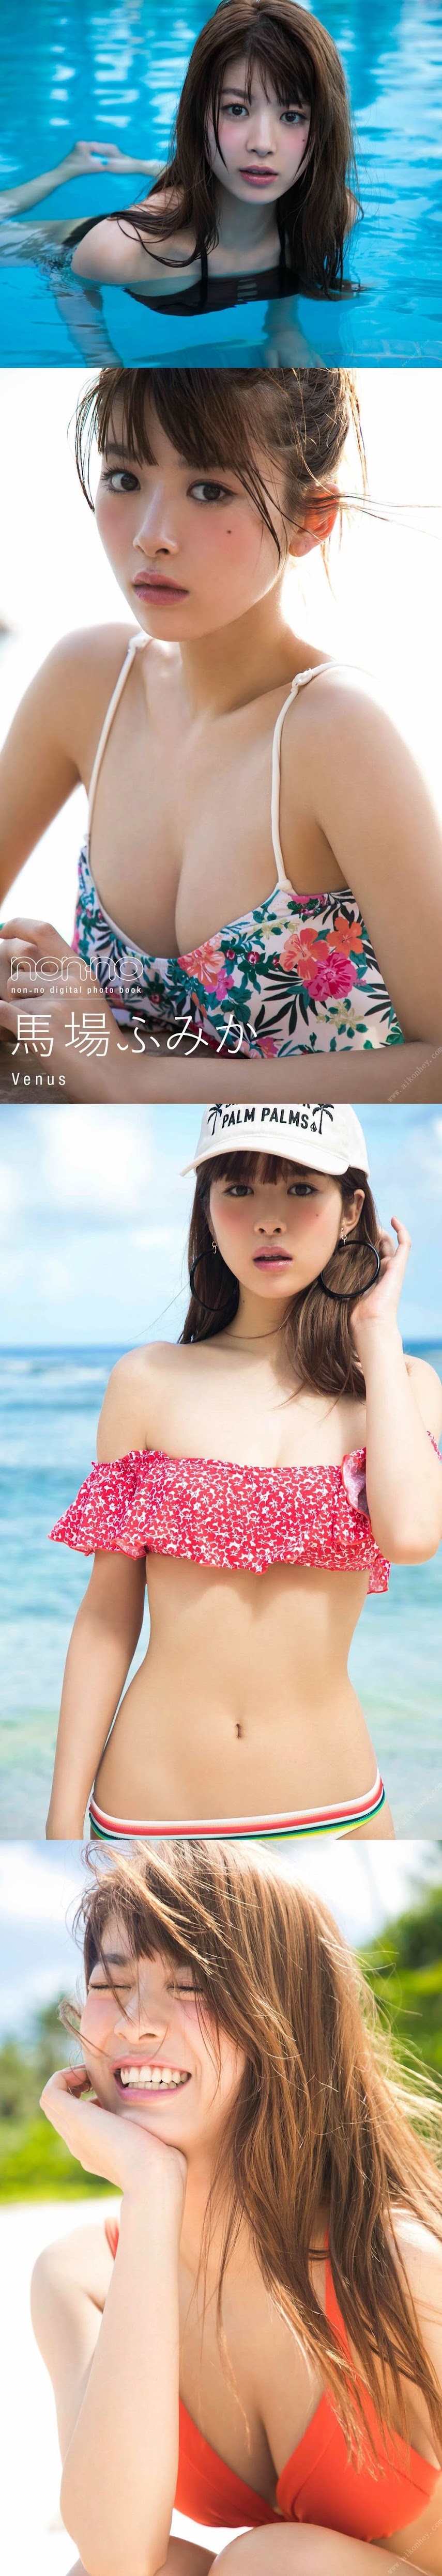 [Digital Photobook] Fumika Baba 馬場ふみか「Venus」 non-noデジタル写真集   P215064 sexy girls image jav